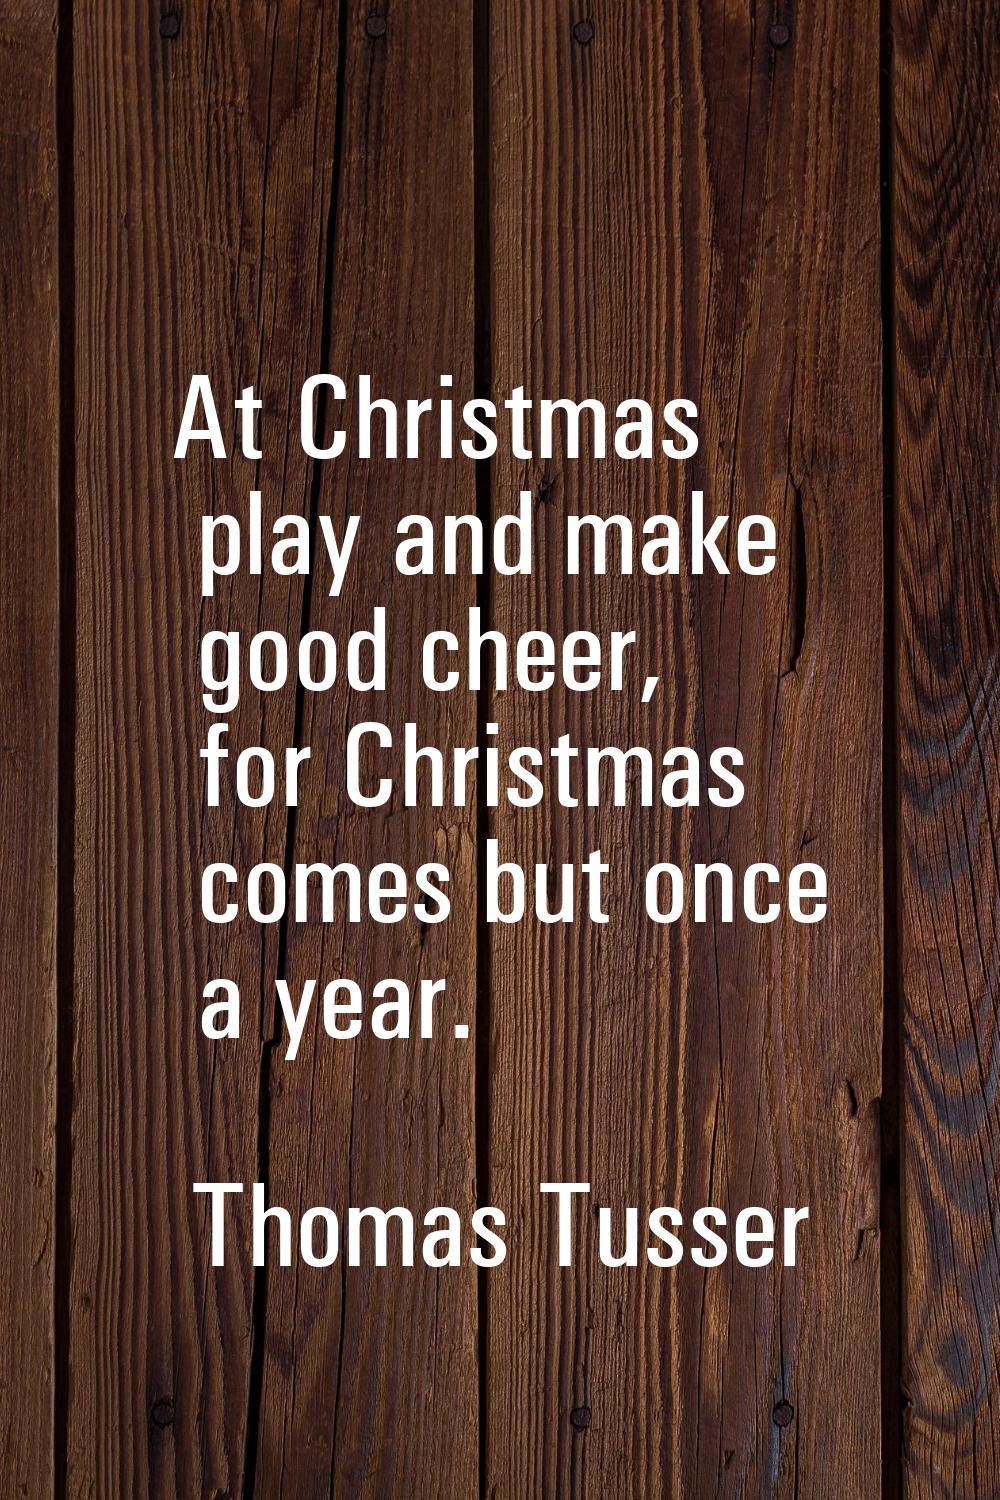 At Christmas play and make good cheer, for Christmas comes but once a year.